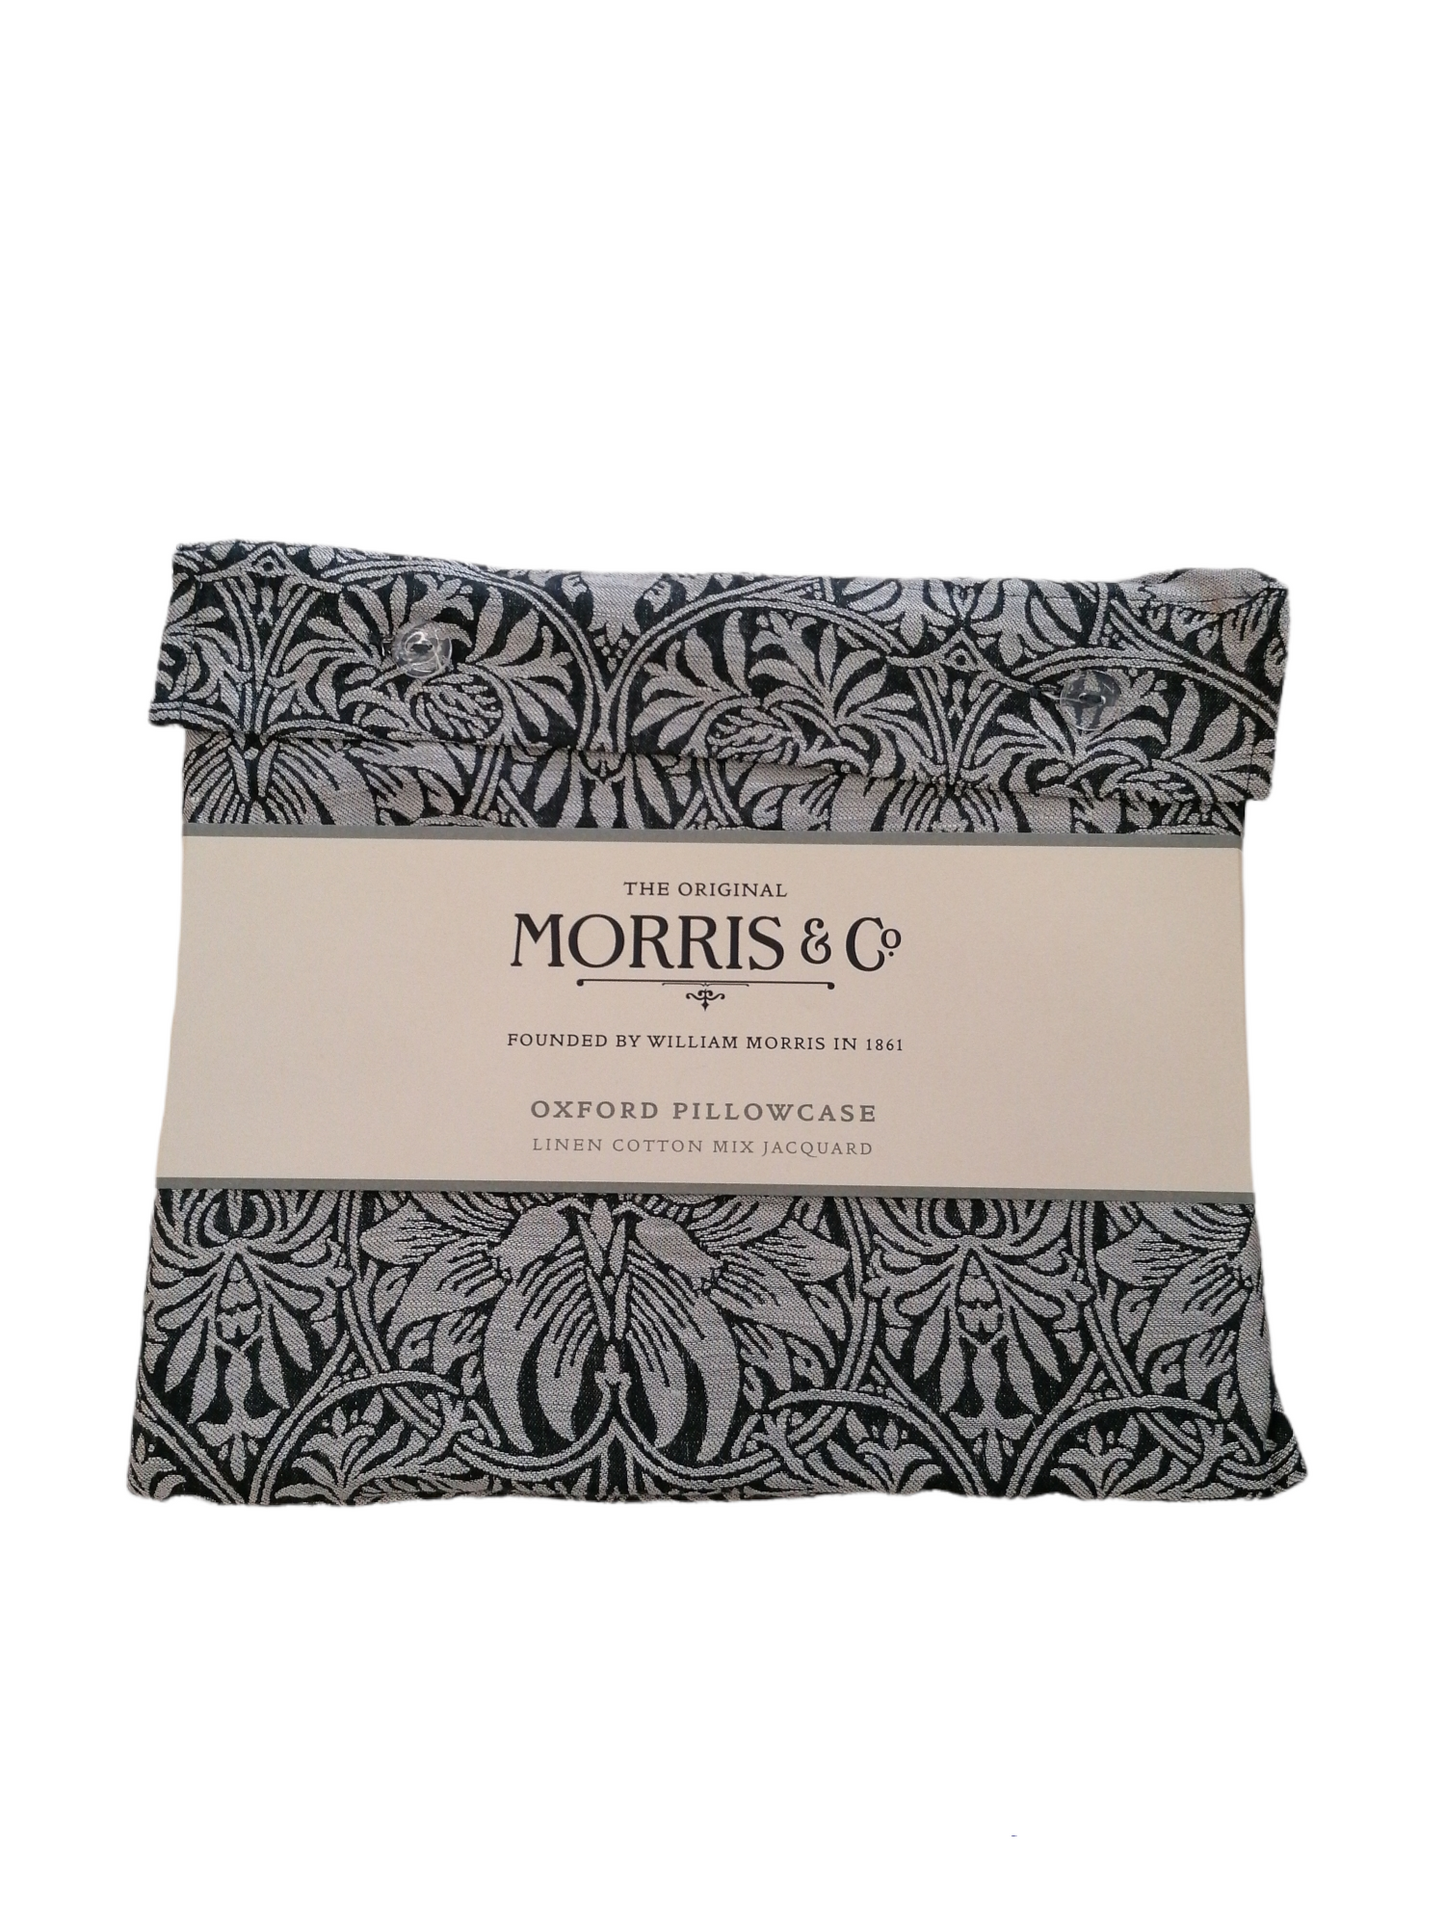 Crown Imperial Oxford Pillowcase